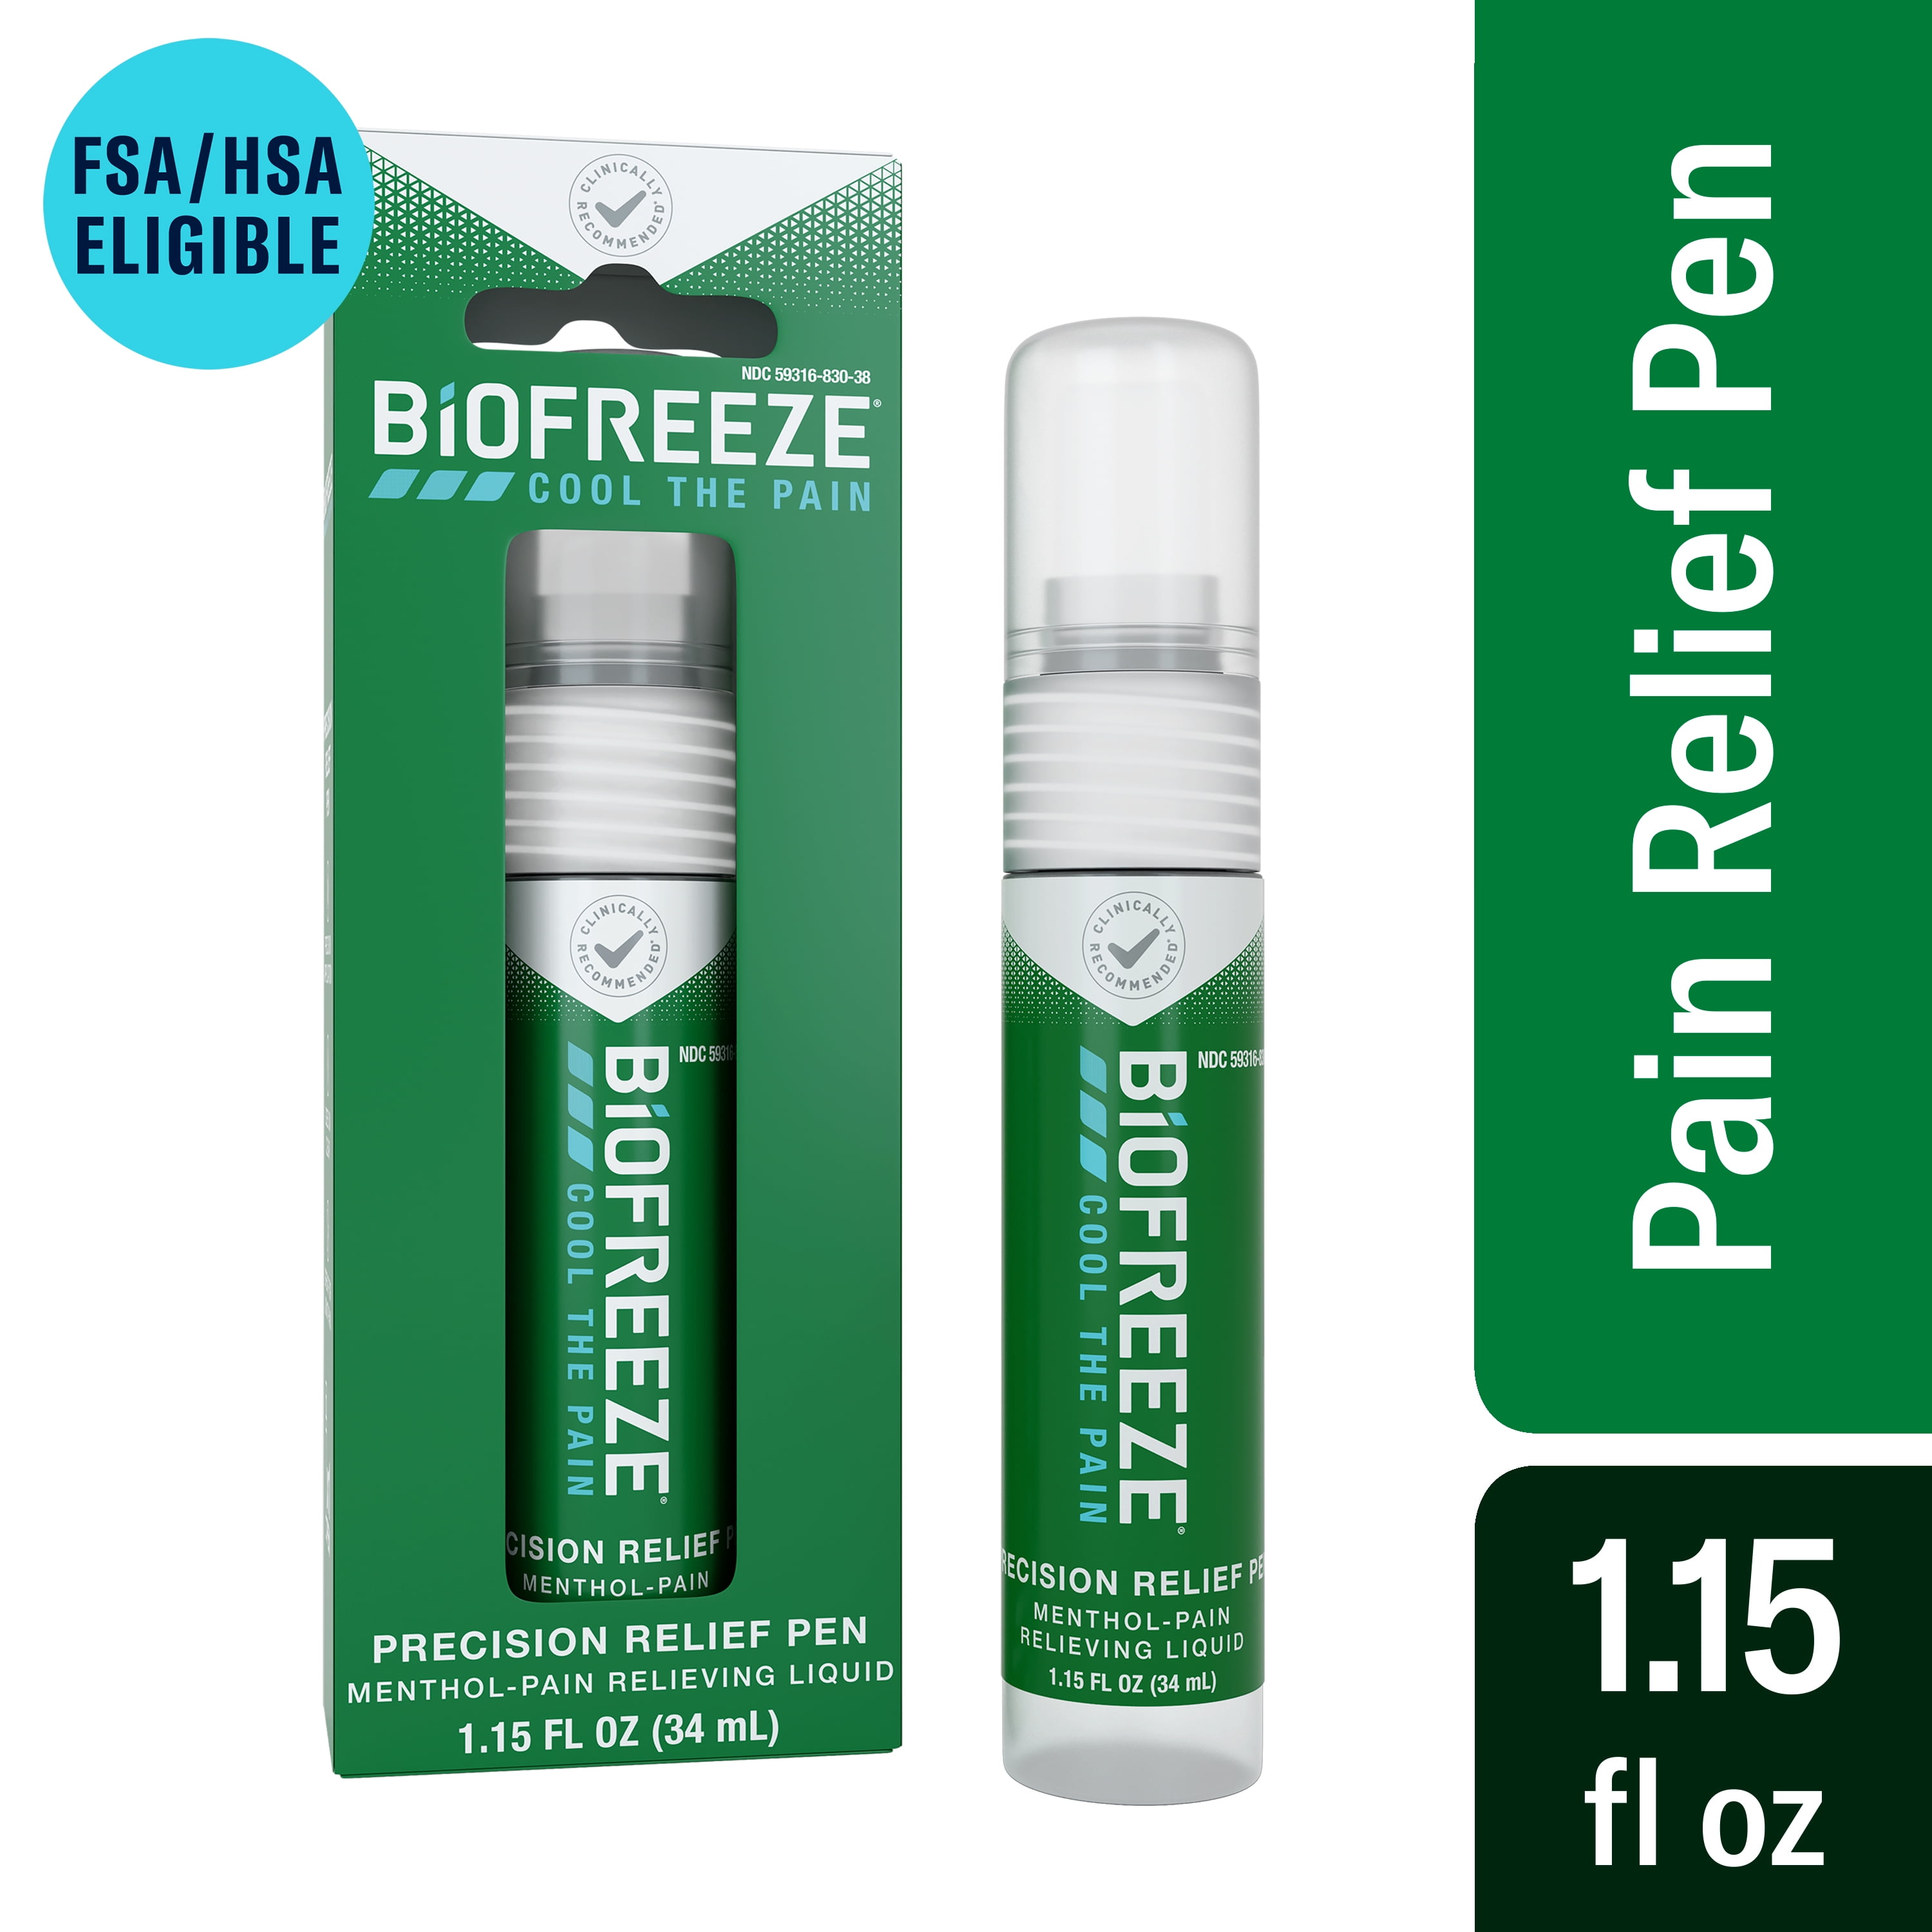 Biofreeze Precision Relief Pen